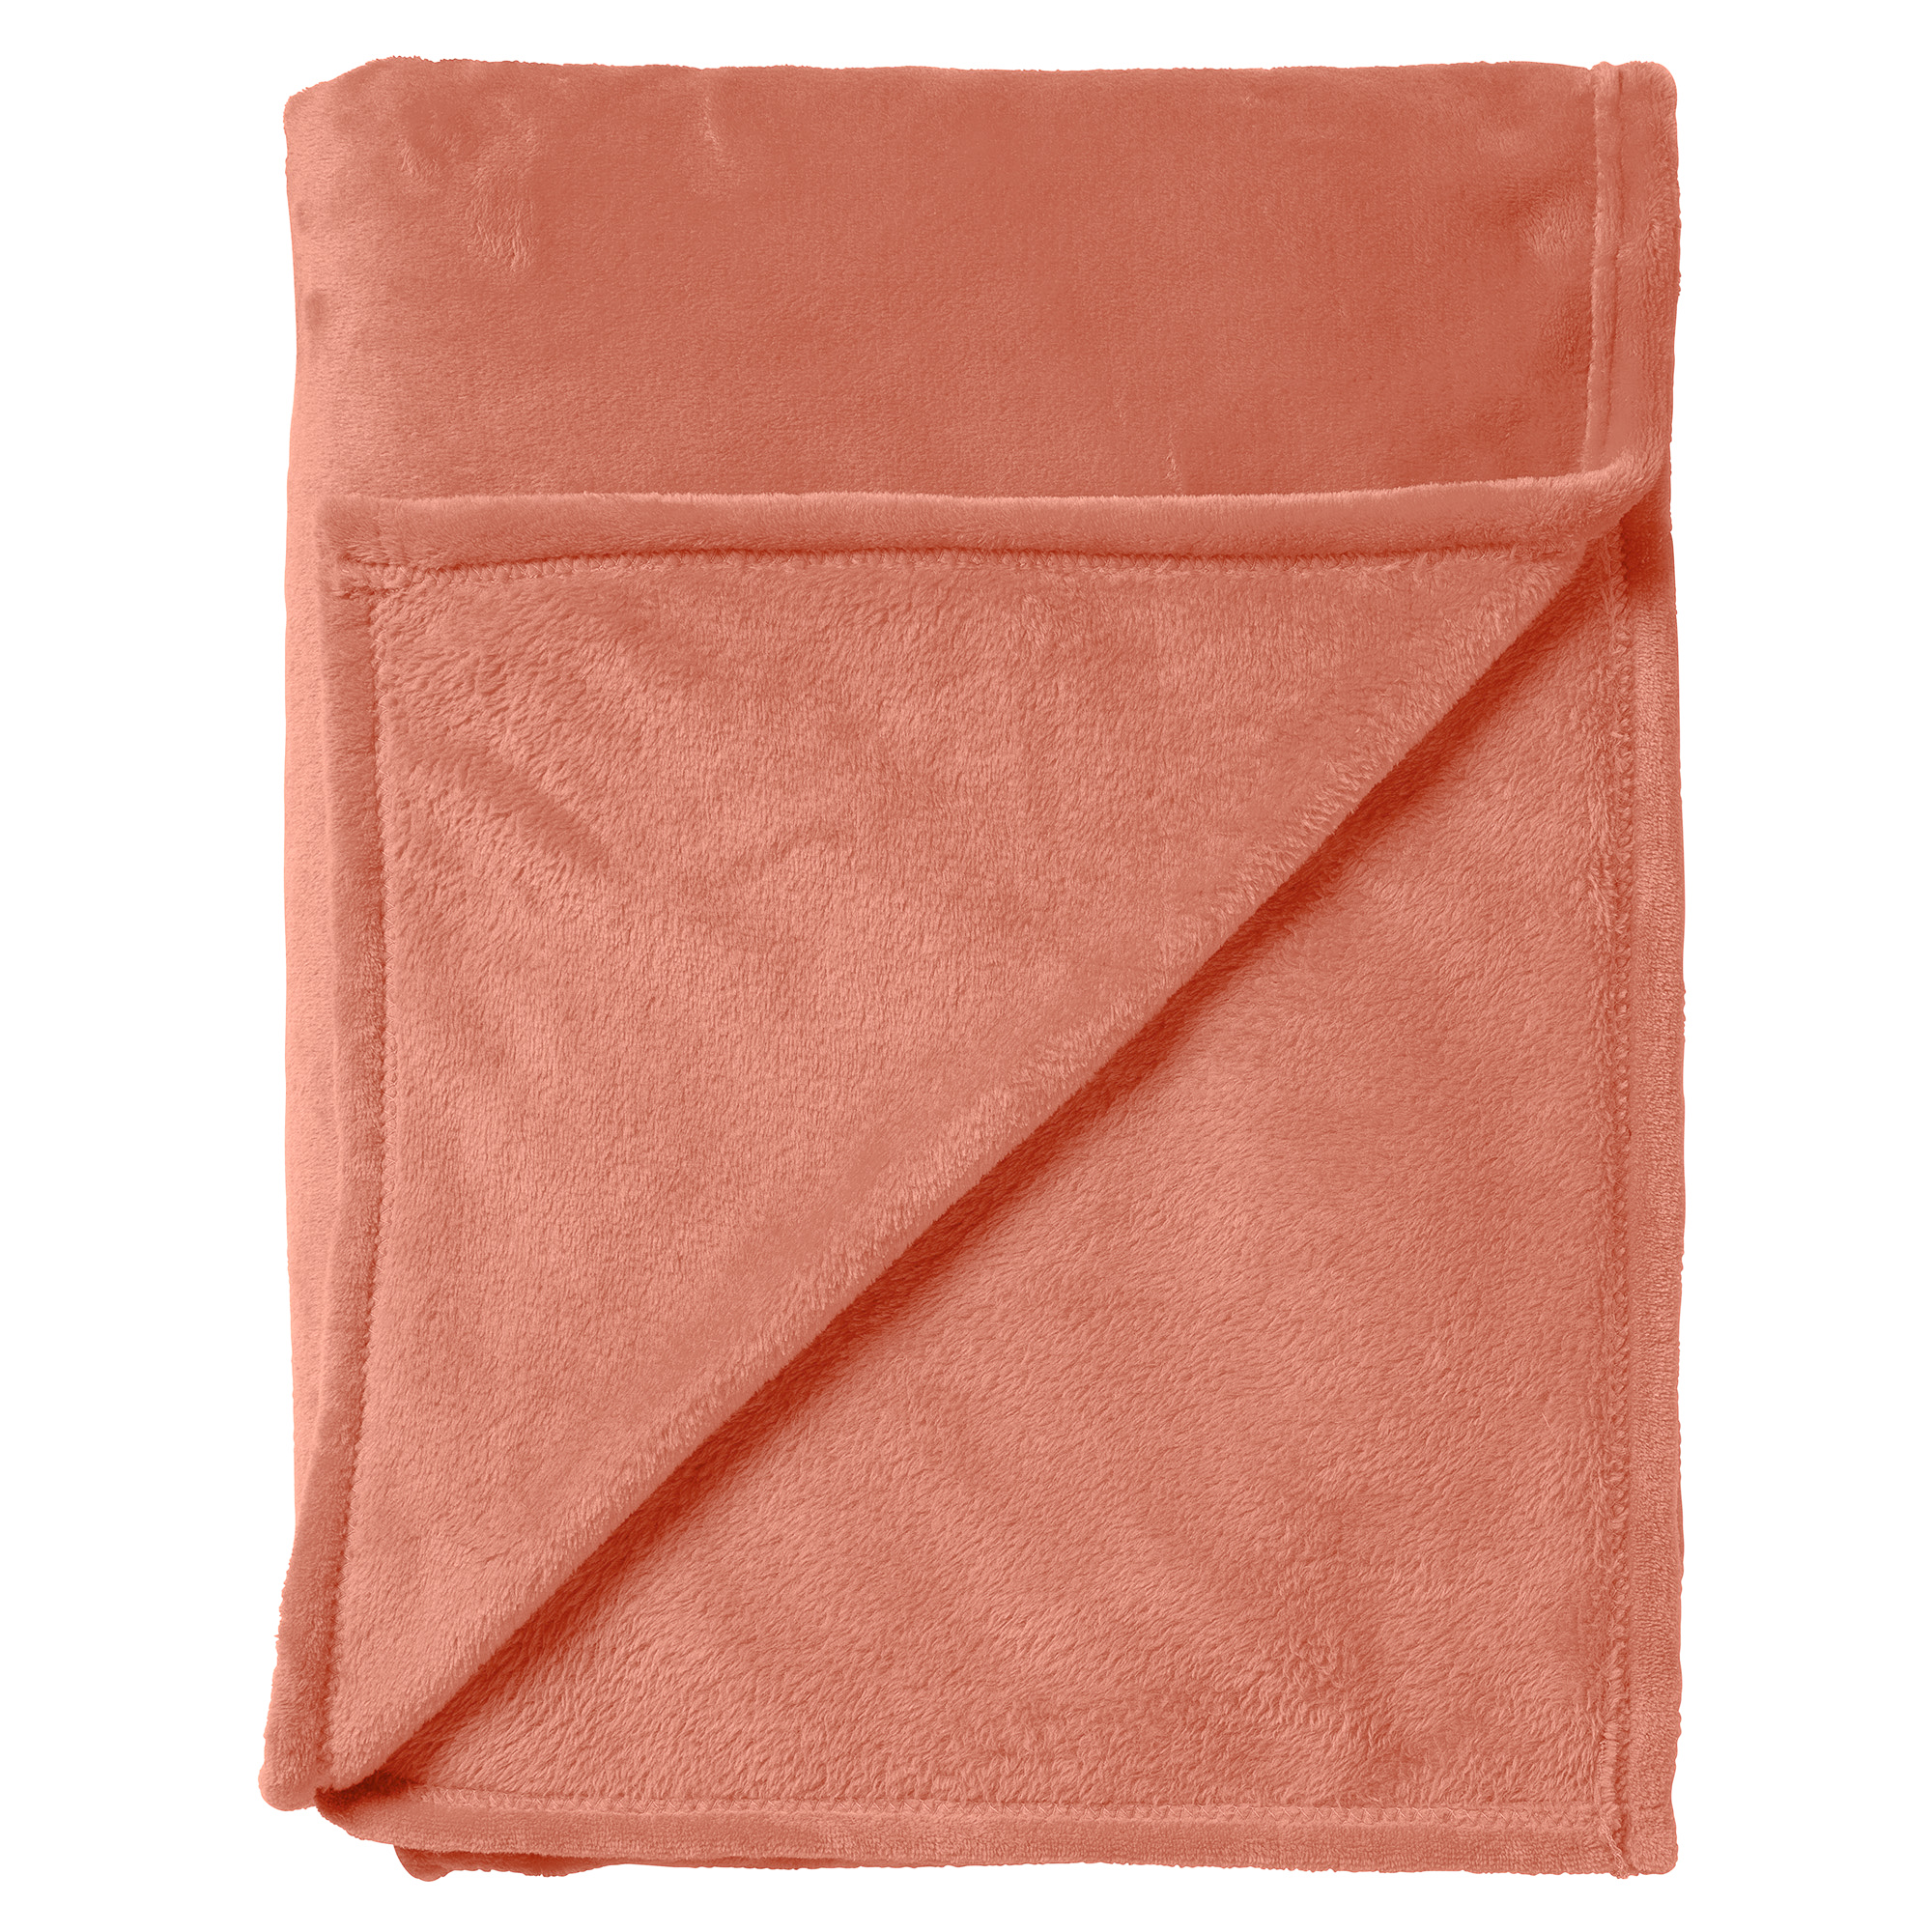 BILLY - Plaid 150x200 cm - flannel fleece - superzacht - Muted Clay - roze